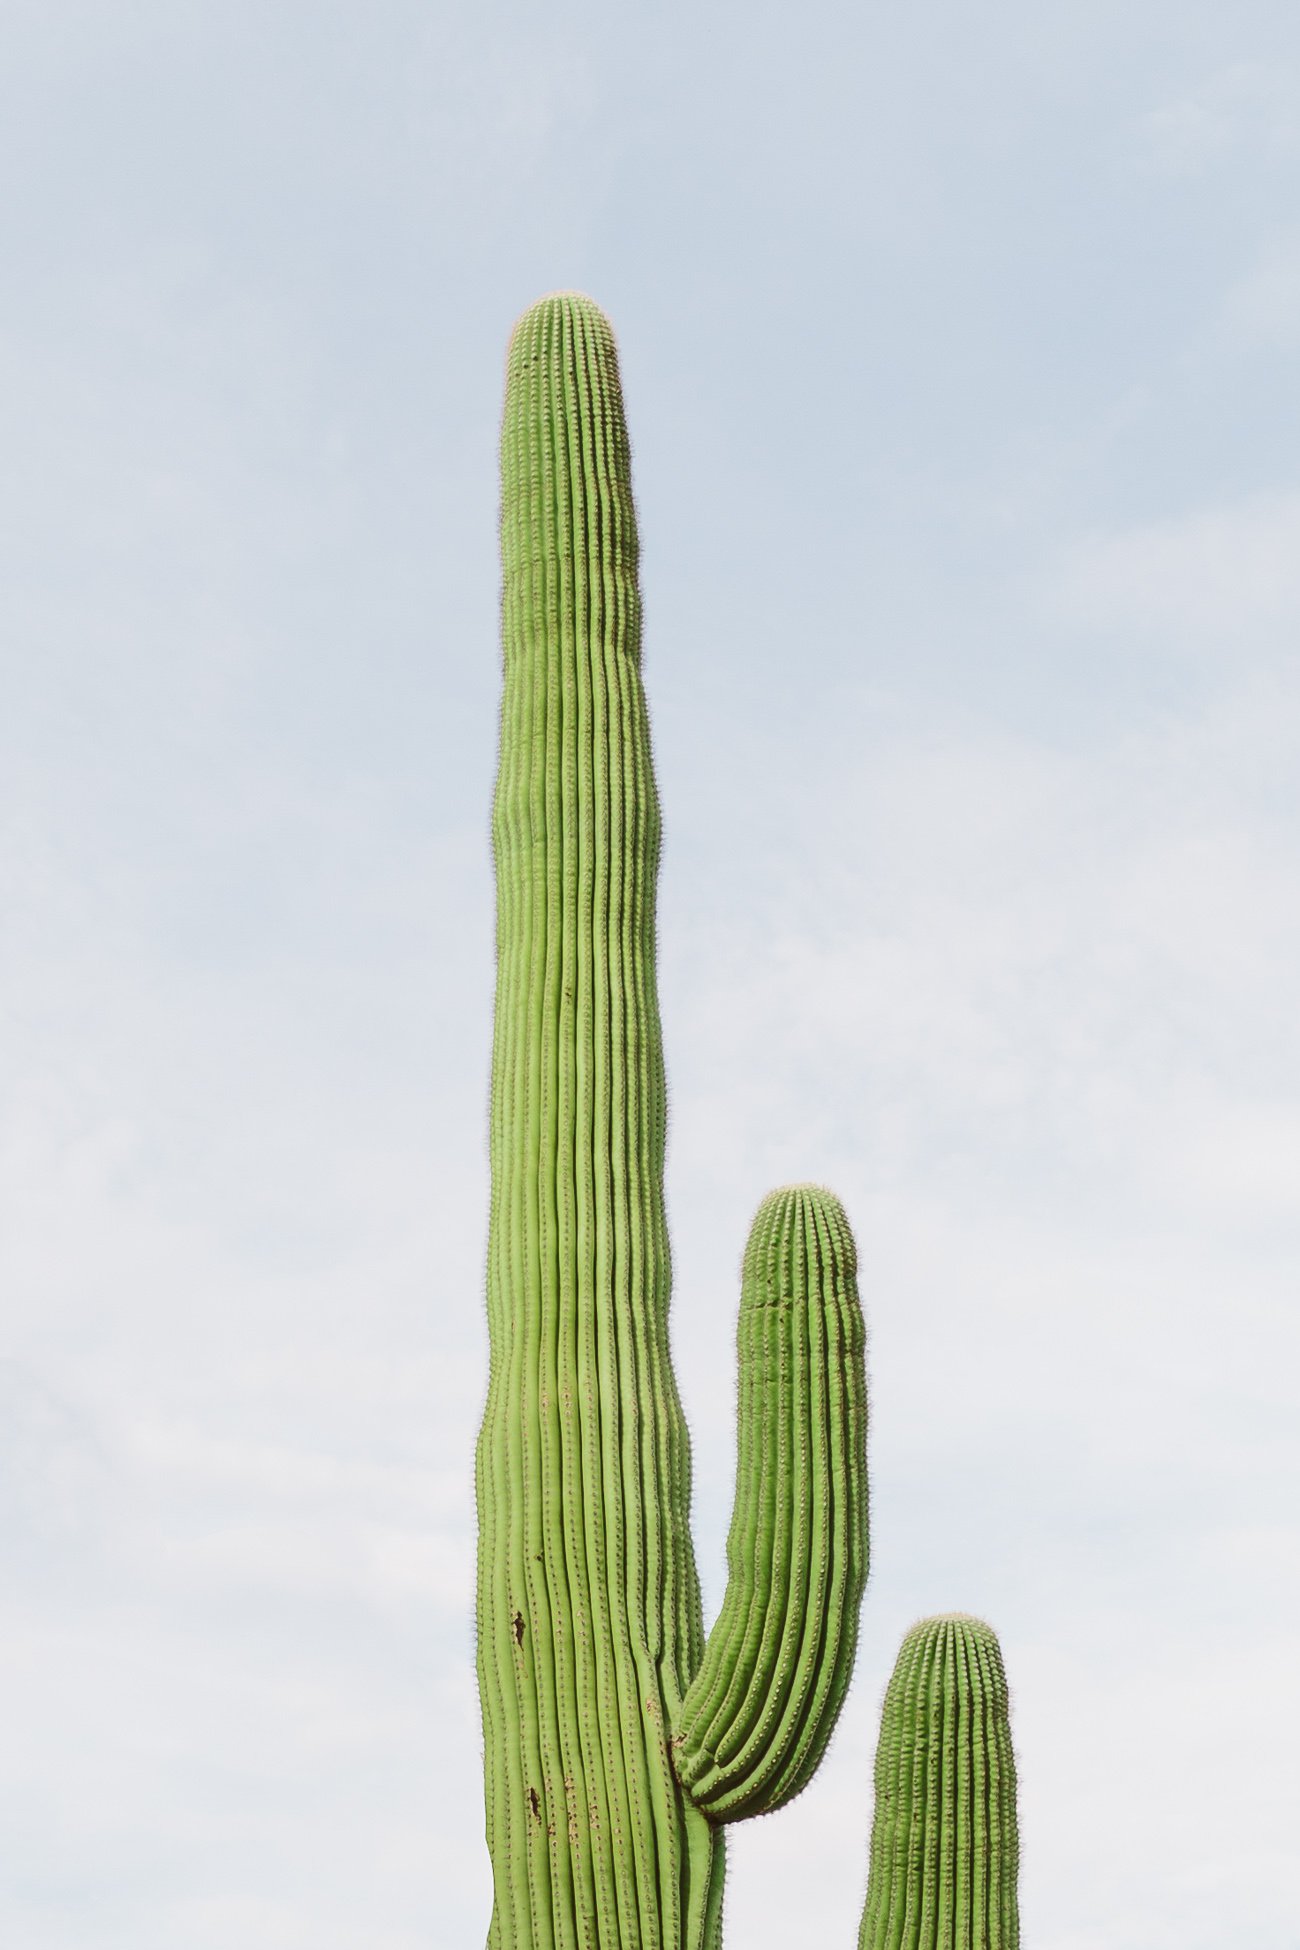 Cactus in Palm Springs